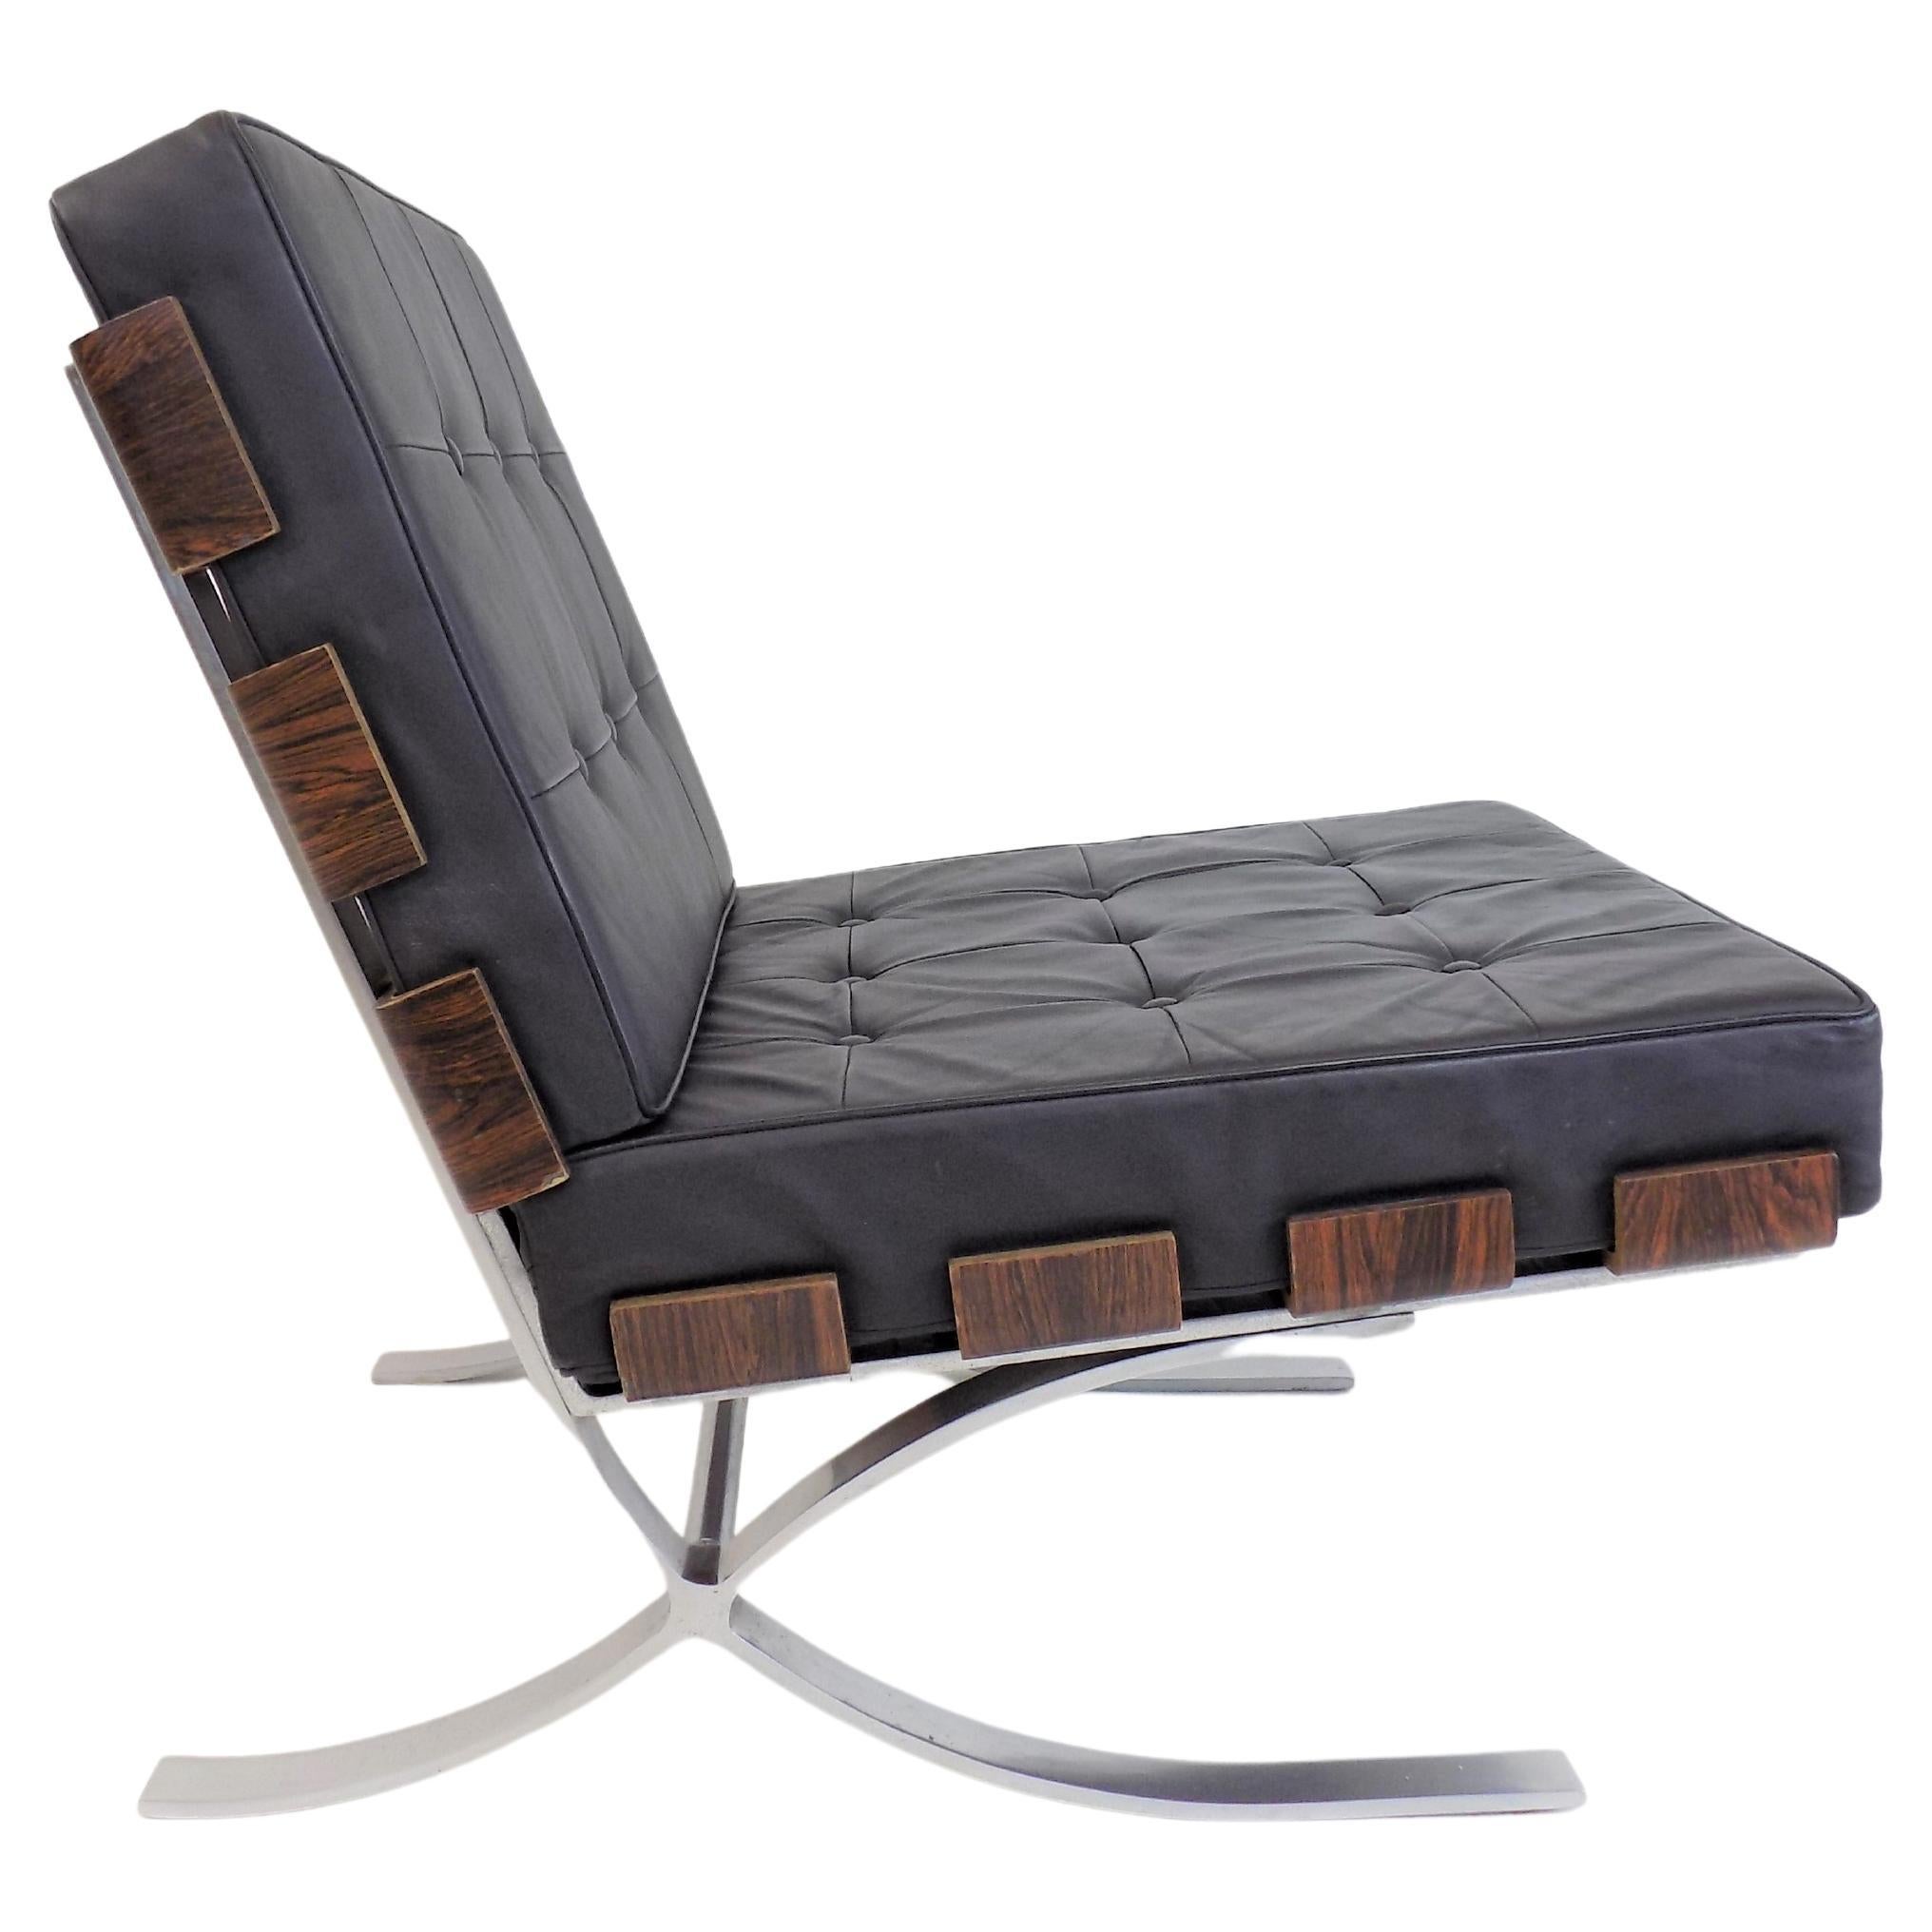 Fröscher Barcelona Leather Chair